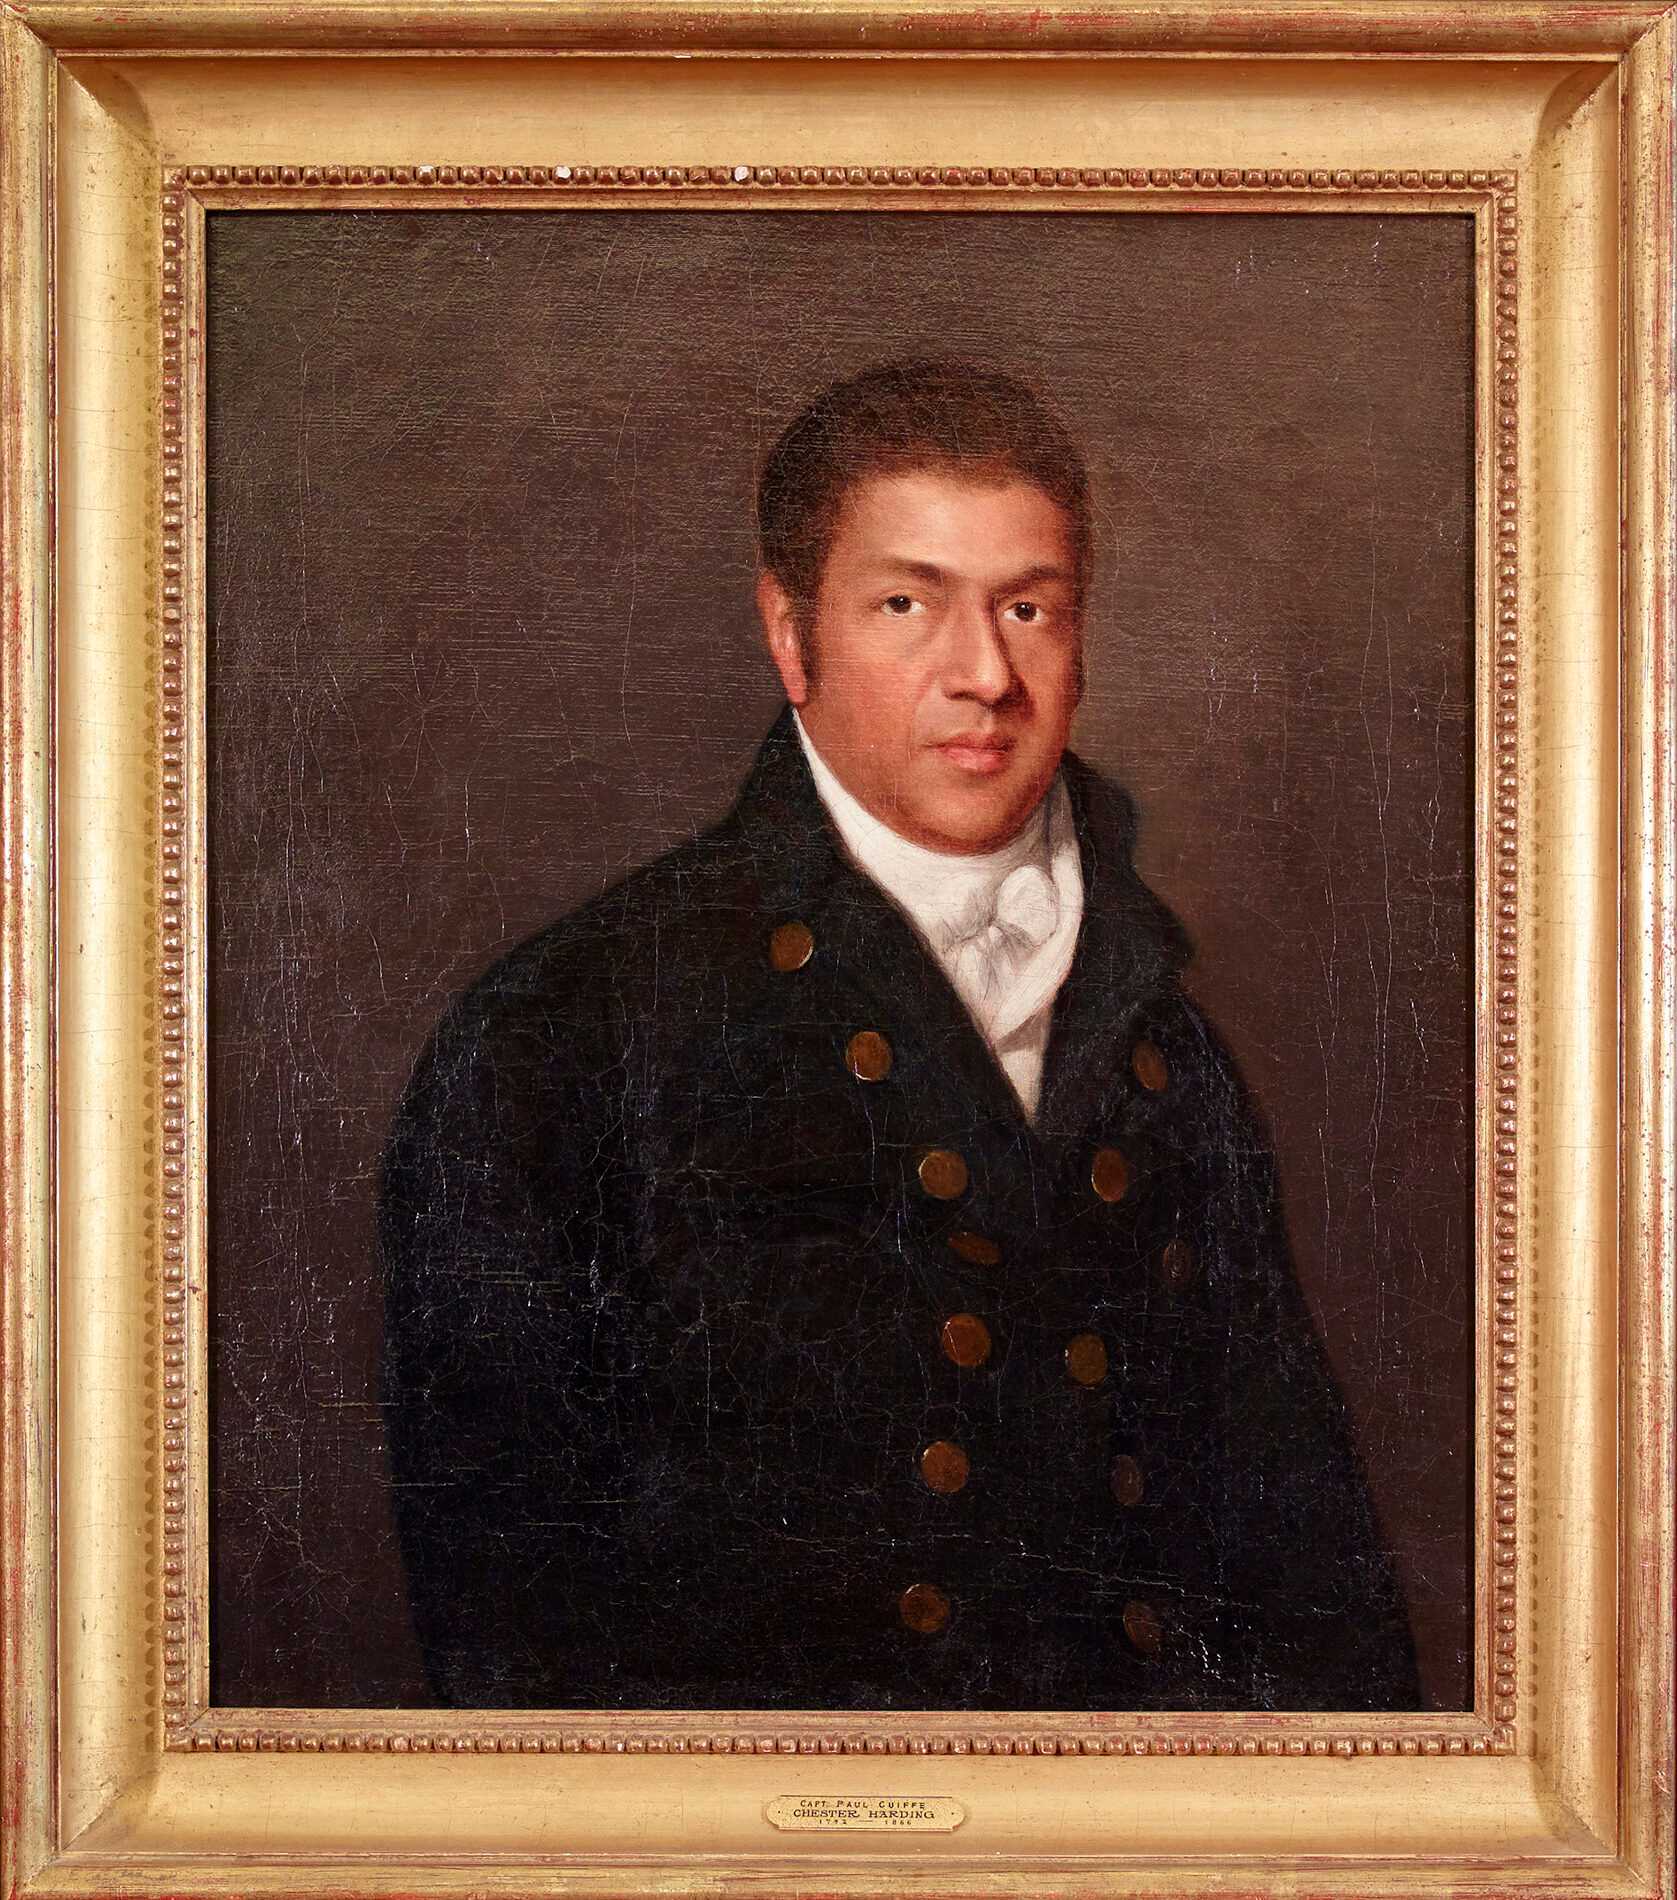 Painted portrait of Paul Cuffe